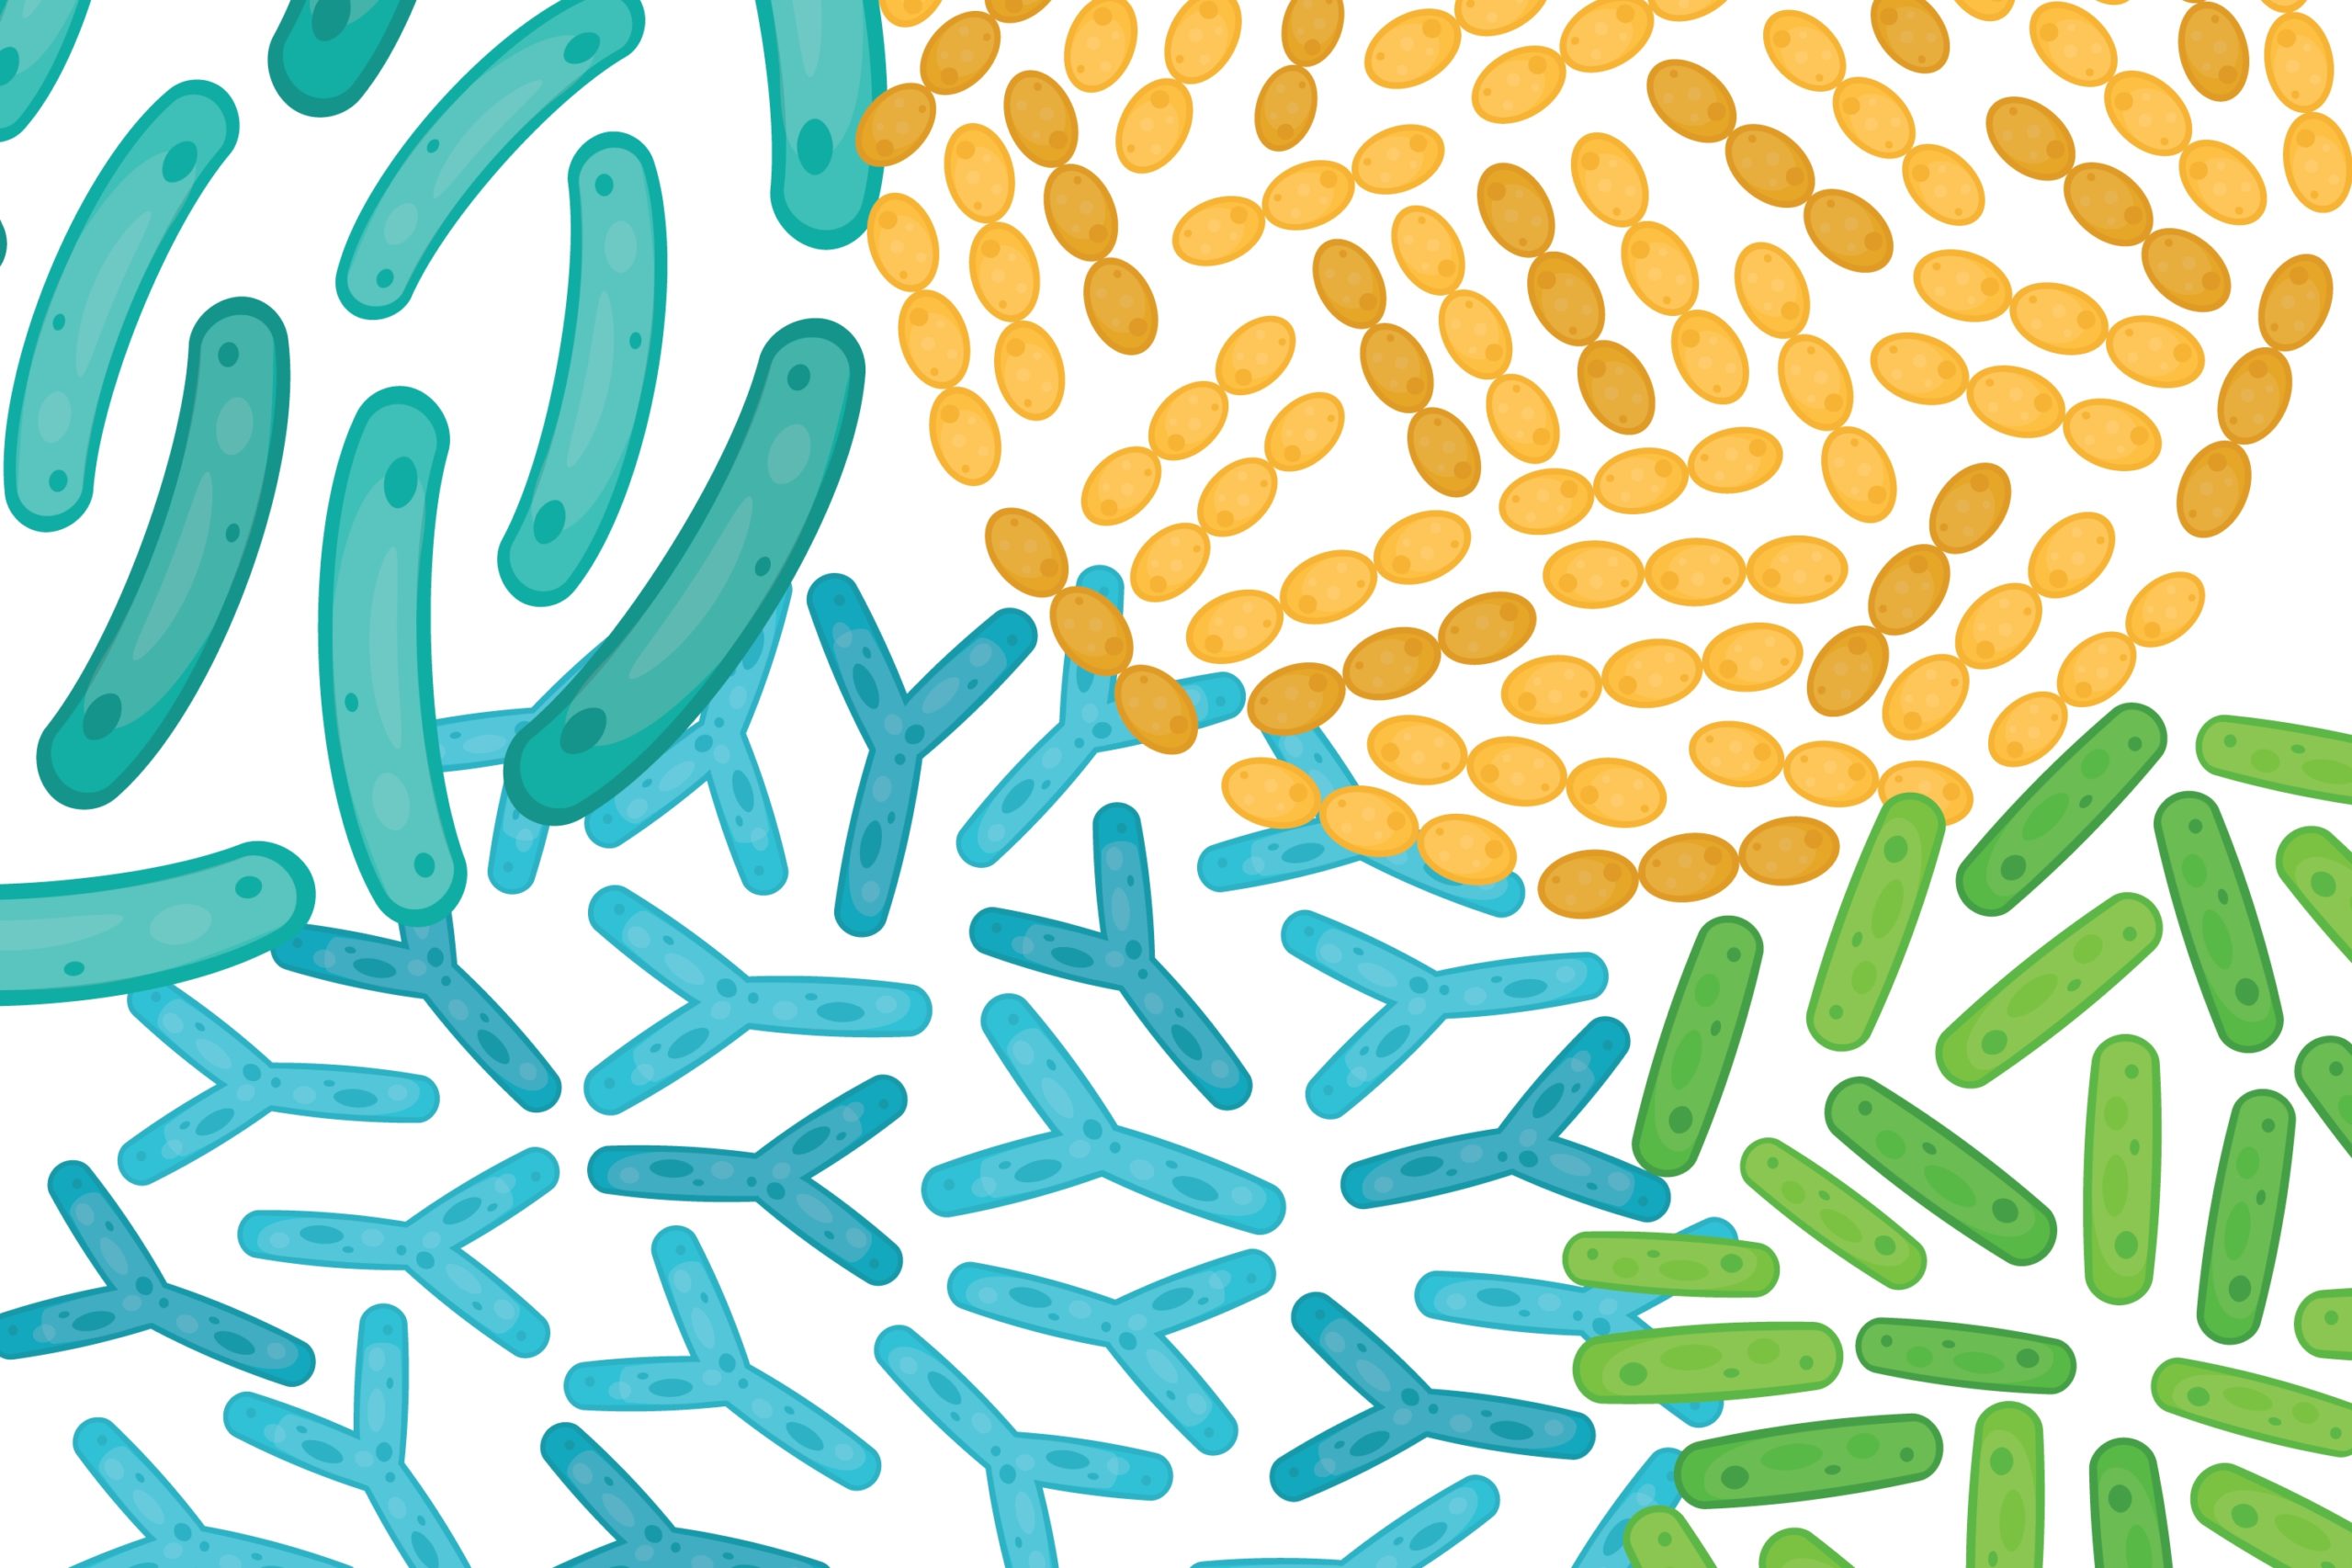 Illustration of probiotics at a cellular level.